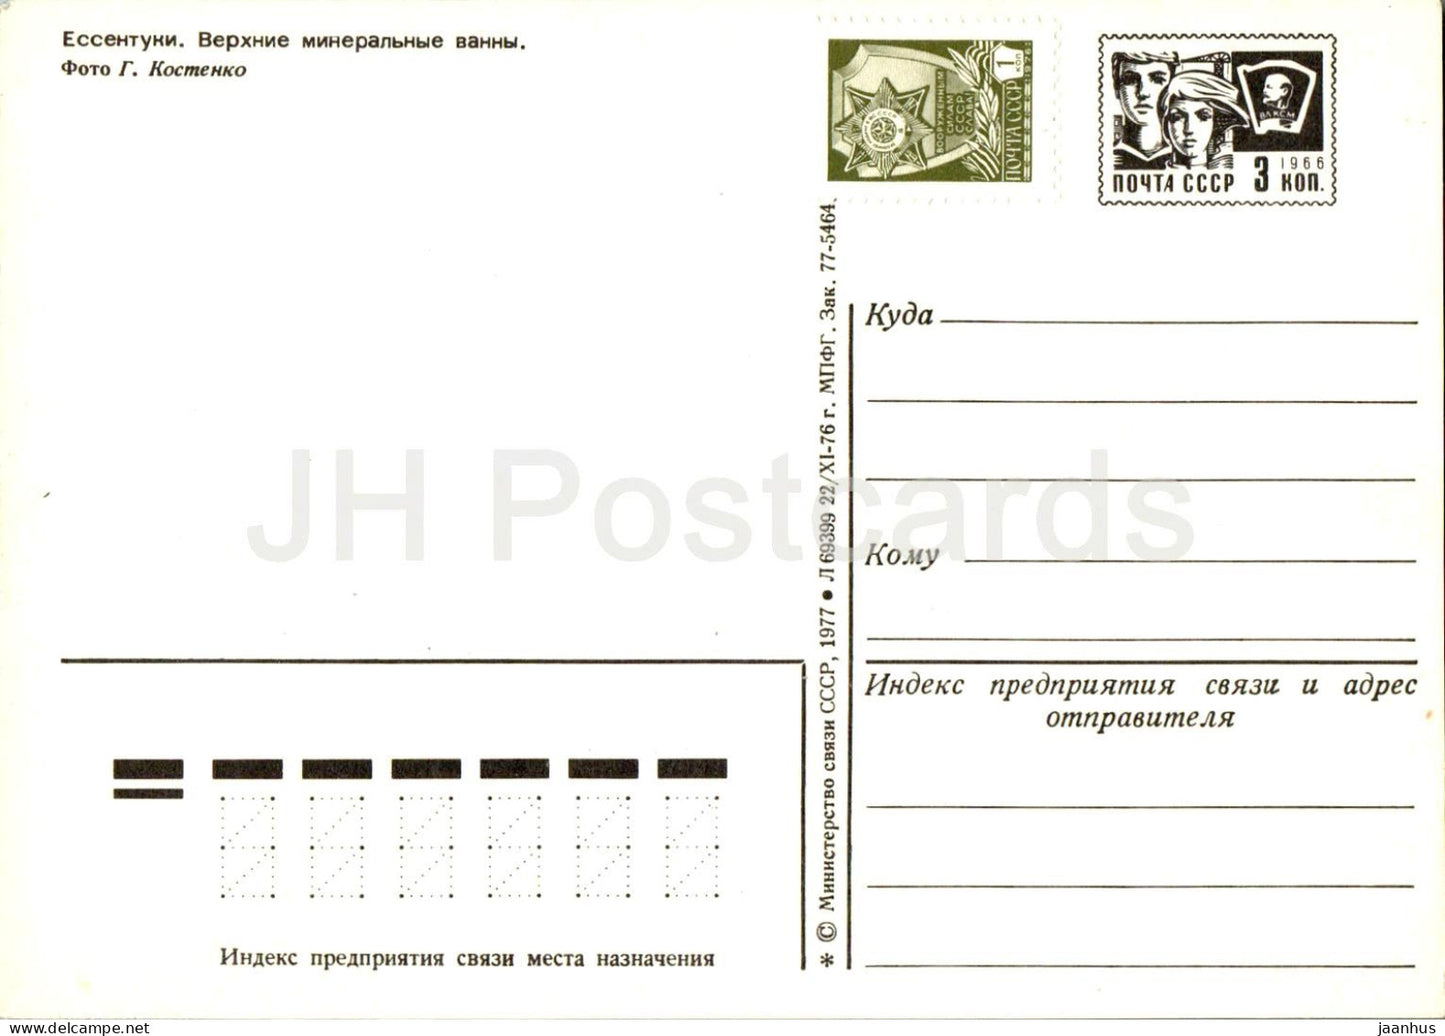 Yessentuki - Upper mineral baths - postal stationery - 1977 - Russia USSR - unused